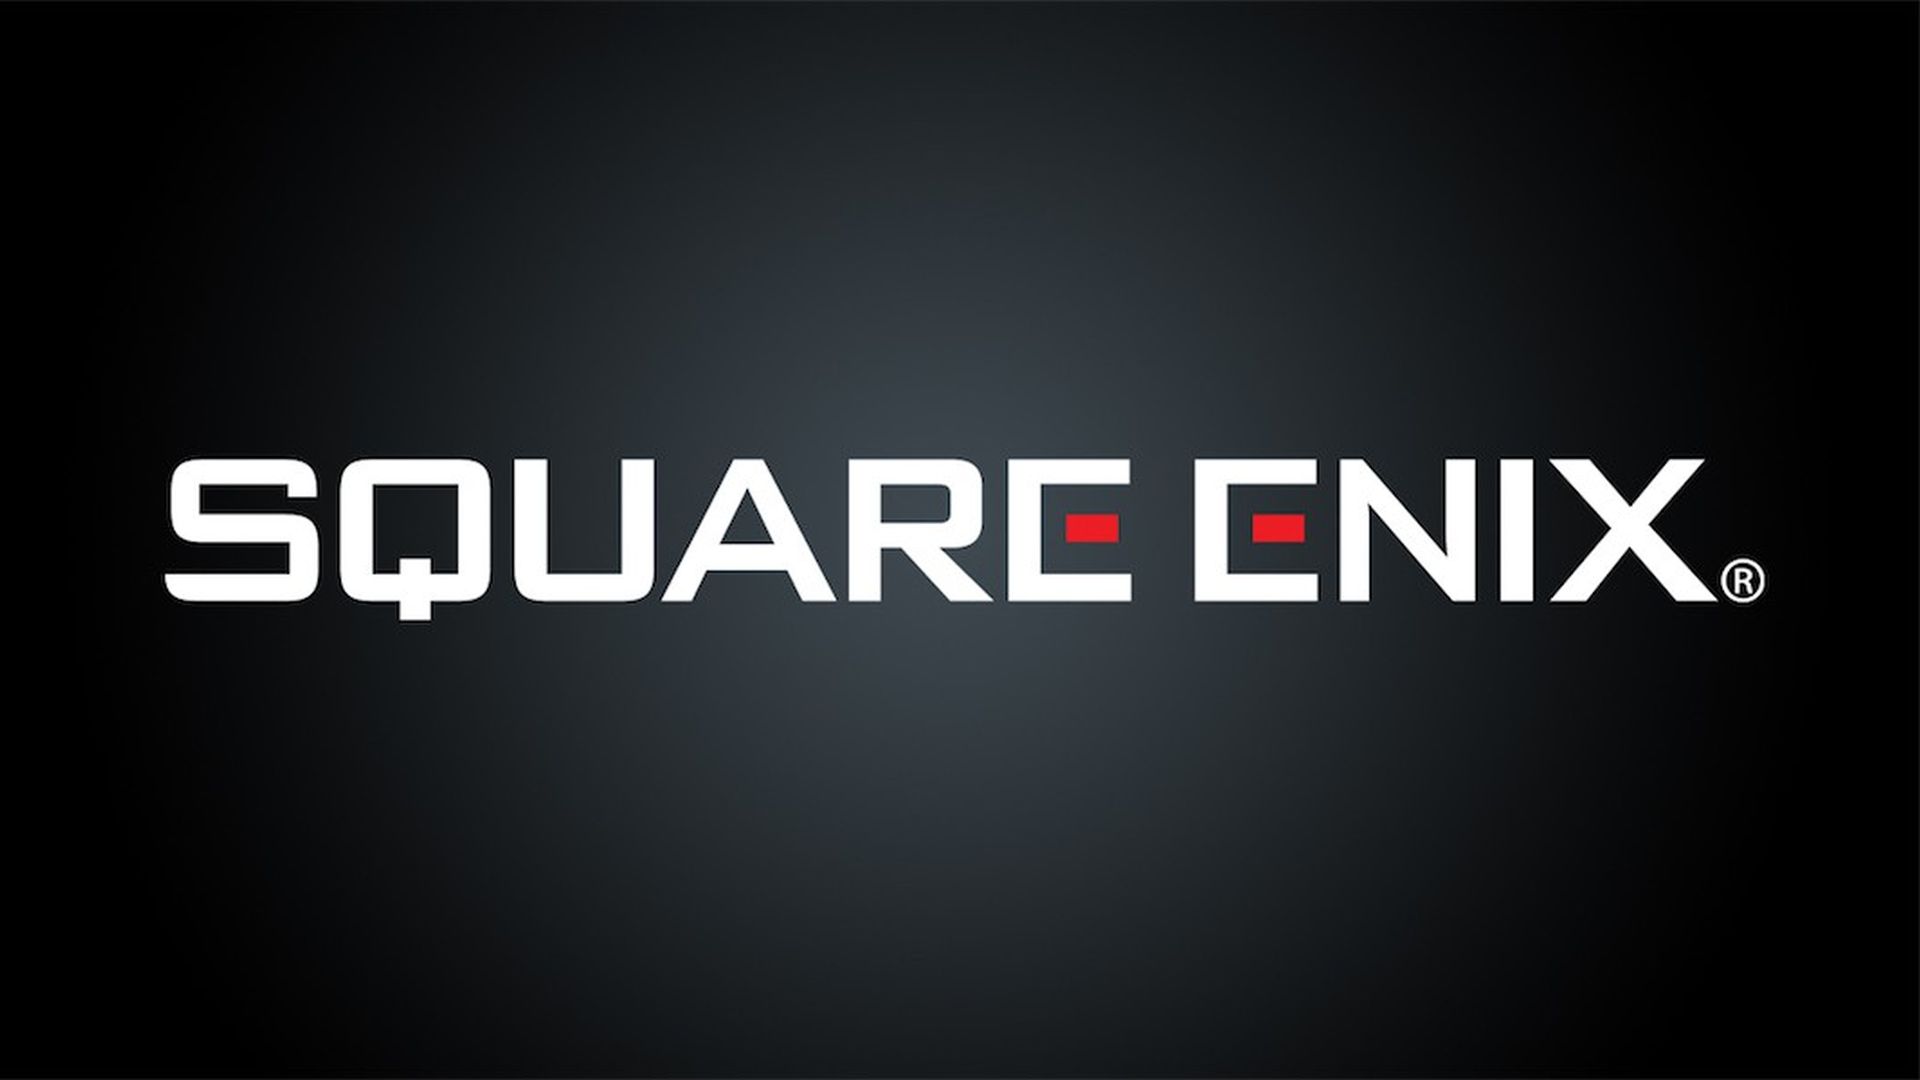 Microsoft Considered Acquiring Square Enix in 2019